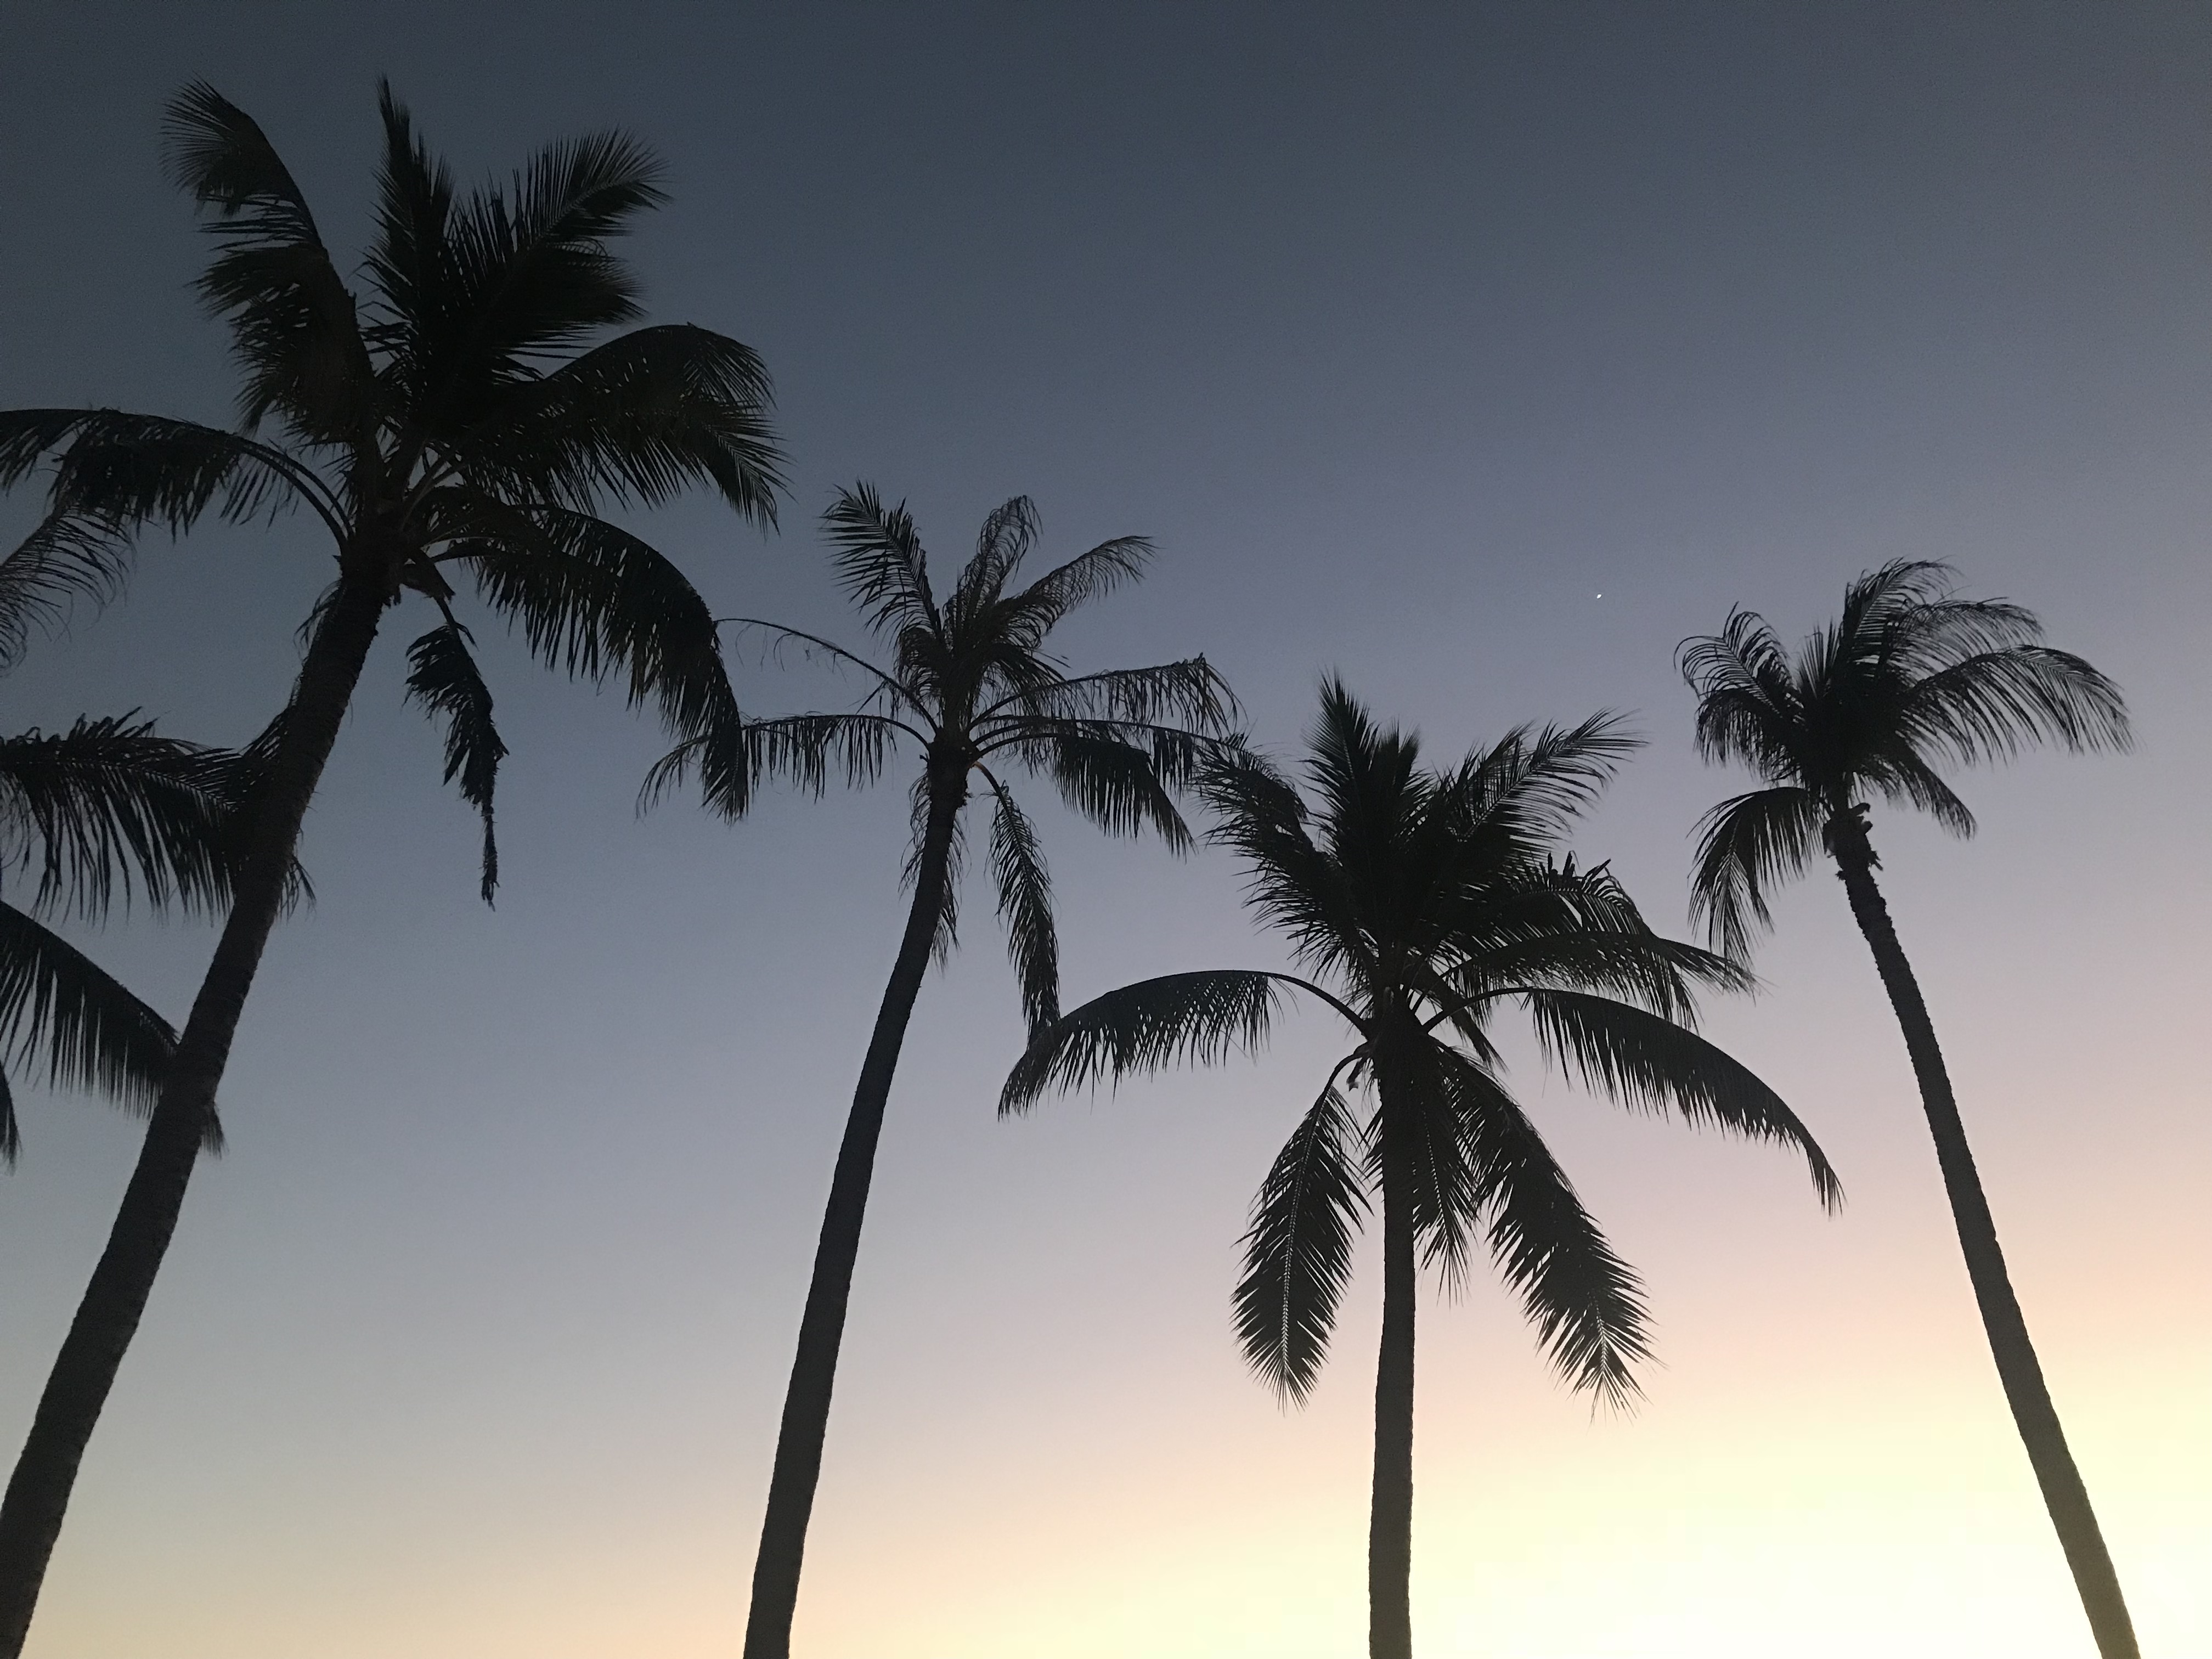 By the sea with Three Palm Trees Hamilton Island 